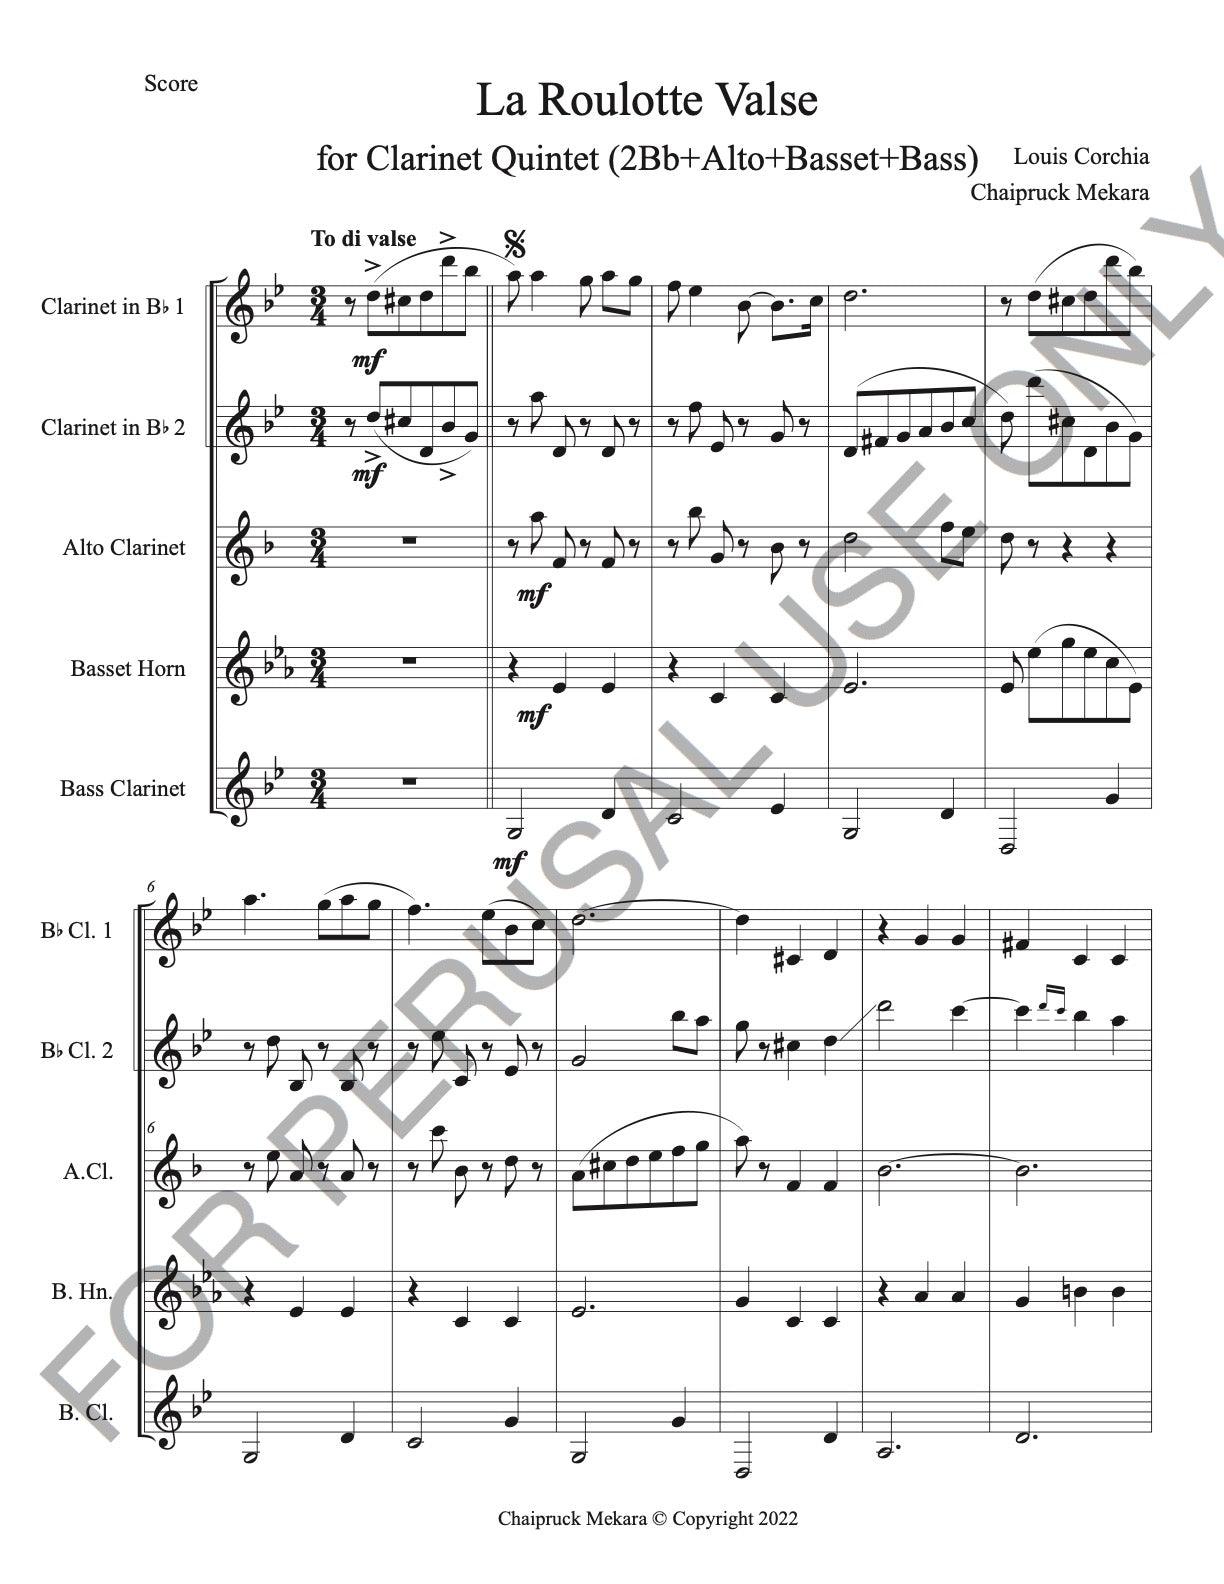 Clarinet Quintet sheet music (2Bb+Alto+Basset+Bass): La Roulotte Valse by Louis Corchia - ChaipruckMekara